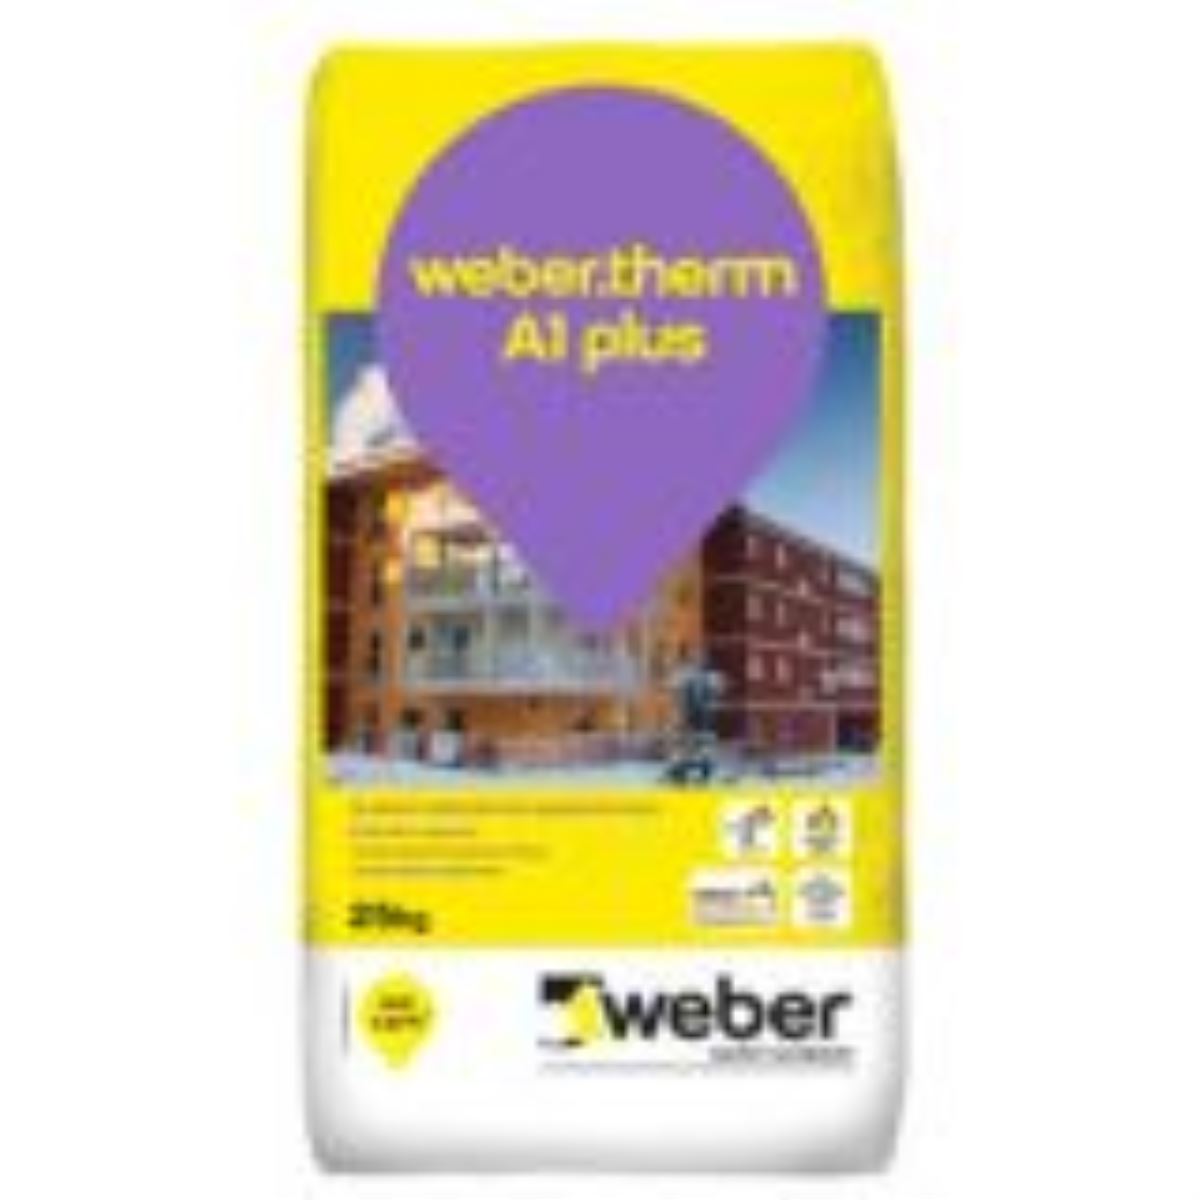 Weber Therm A1 Plus